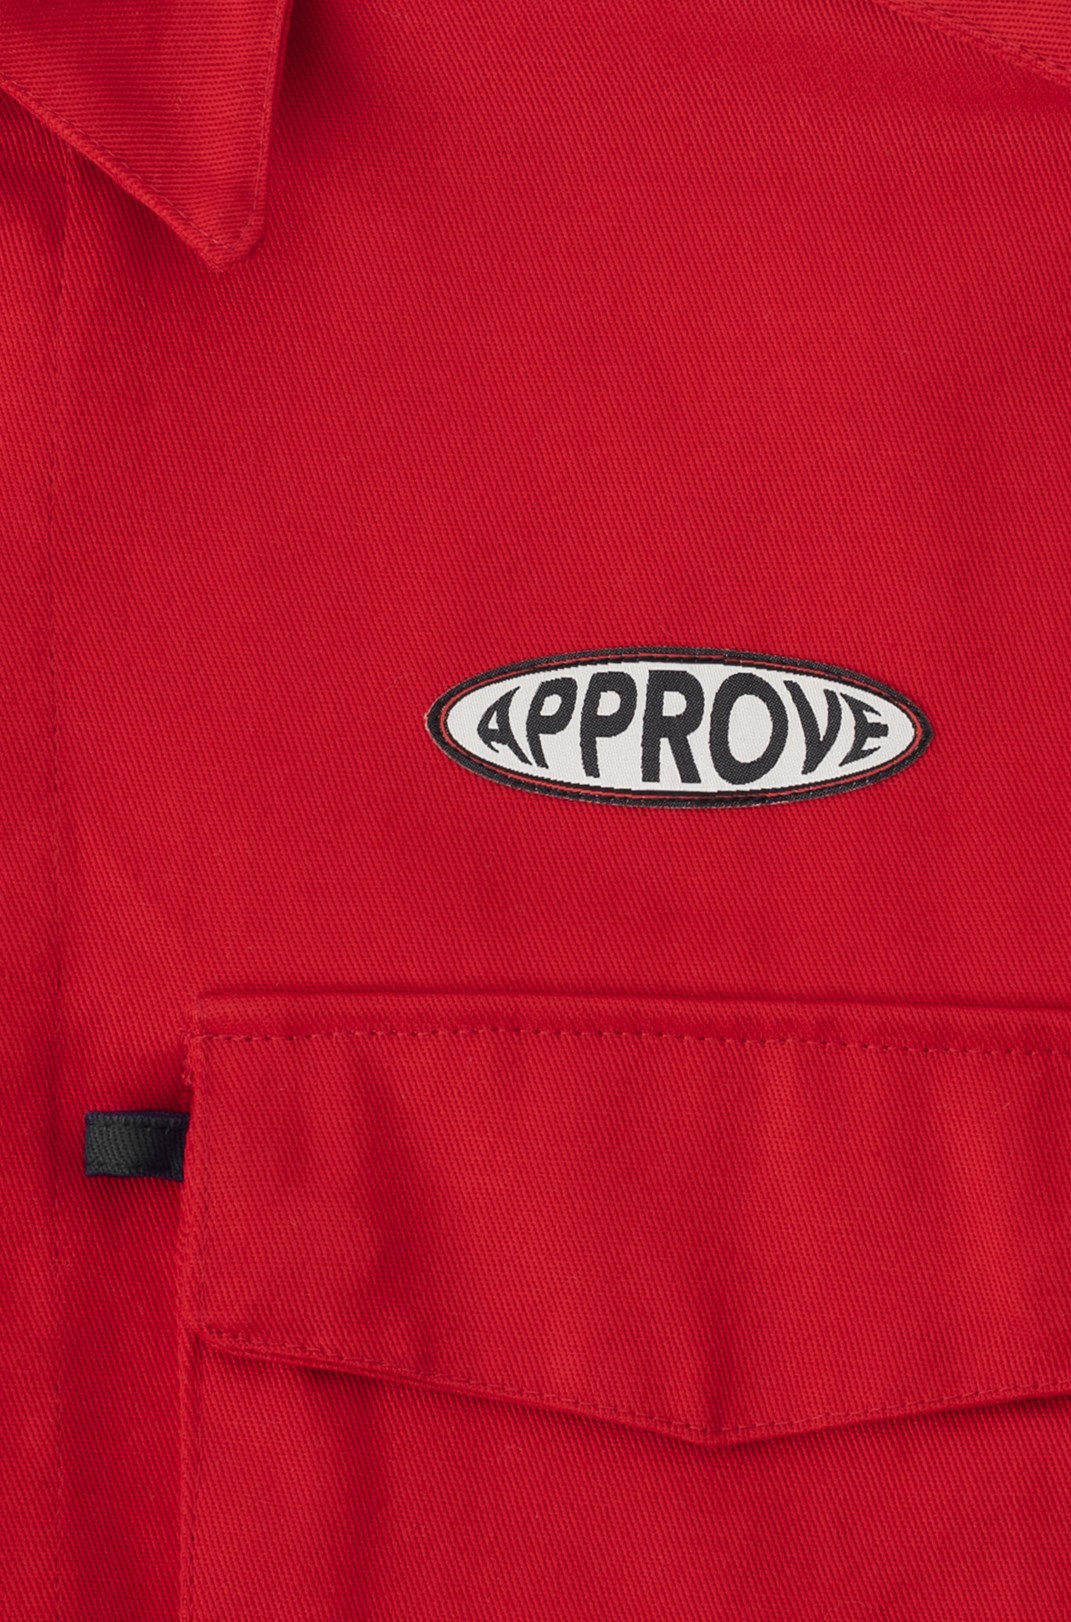 Camisa Sarja Approve Workwear Vermelha